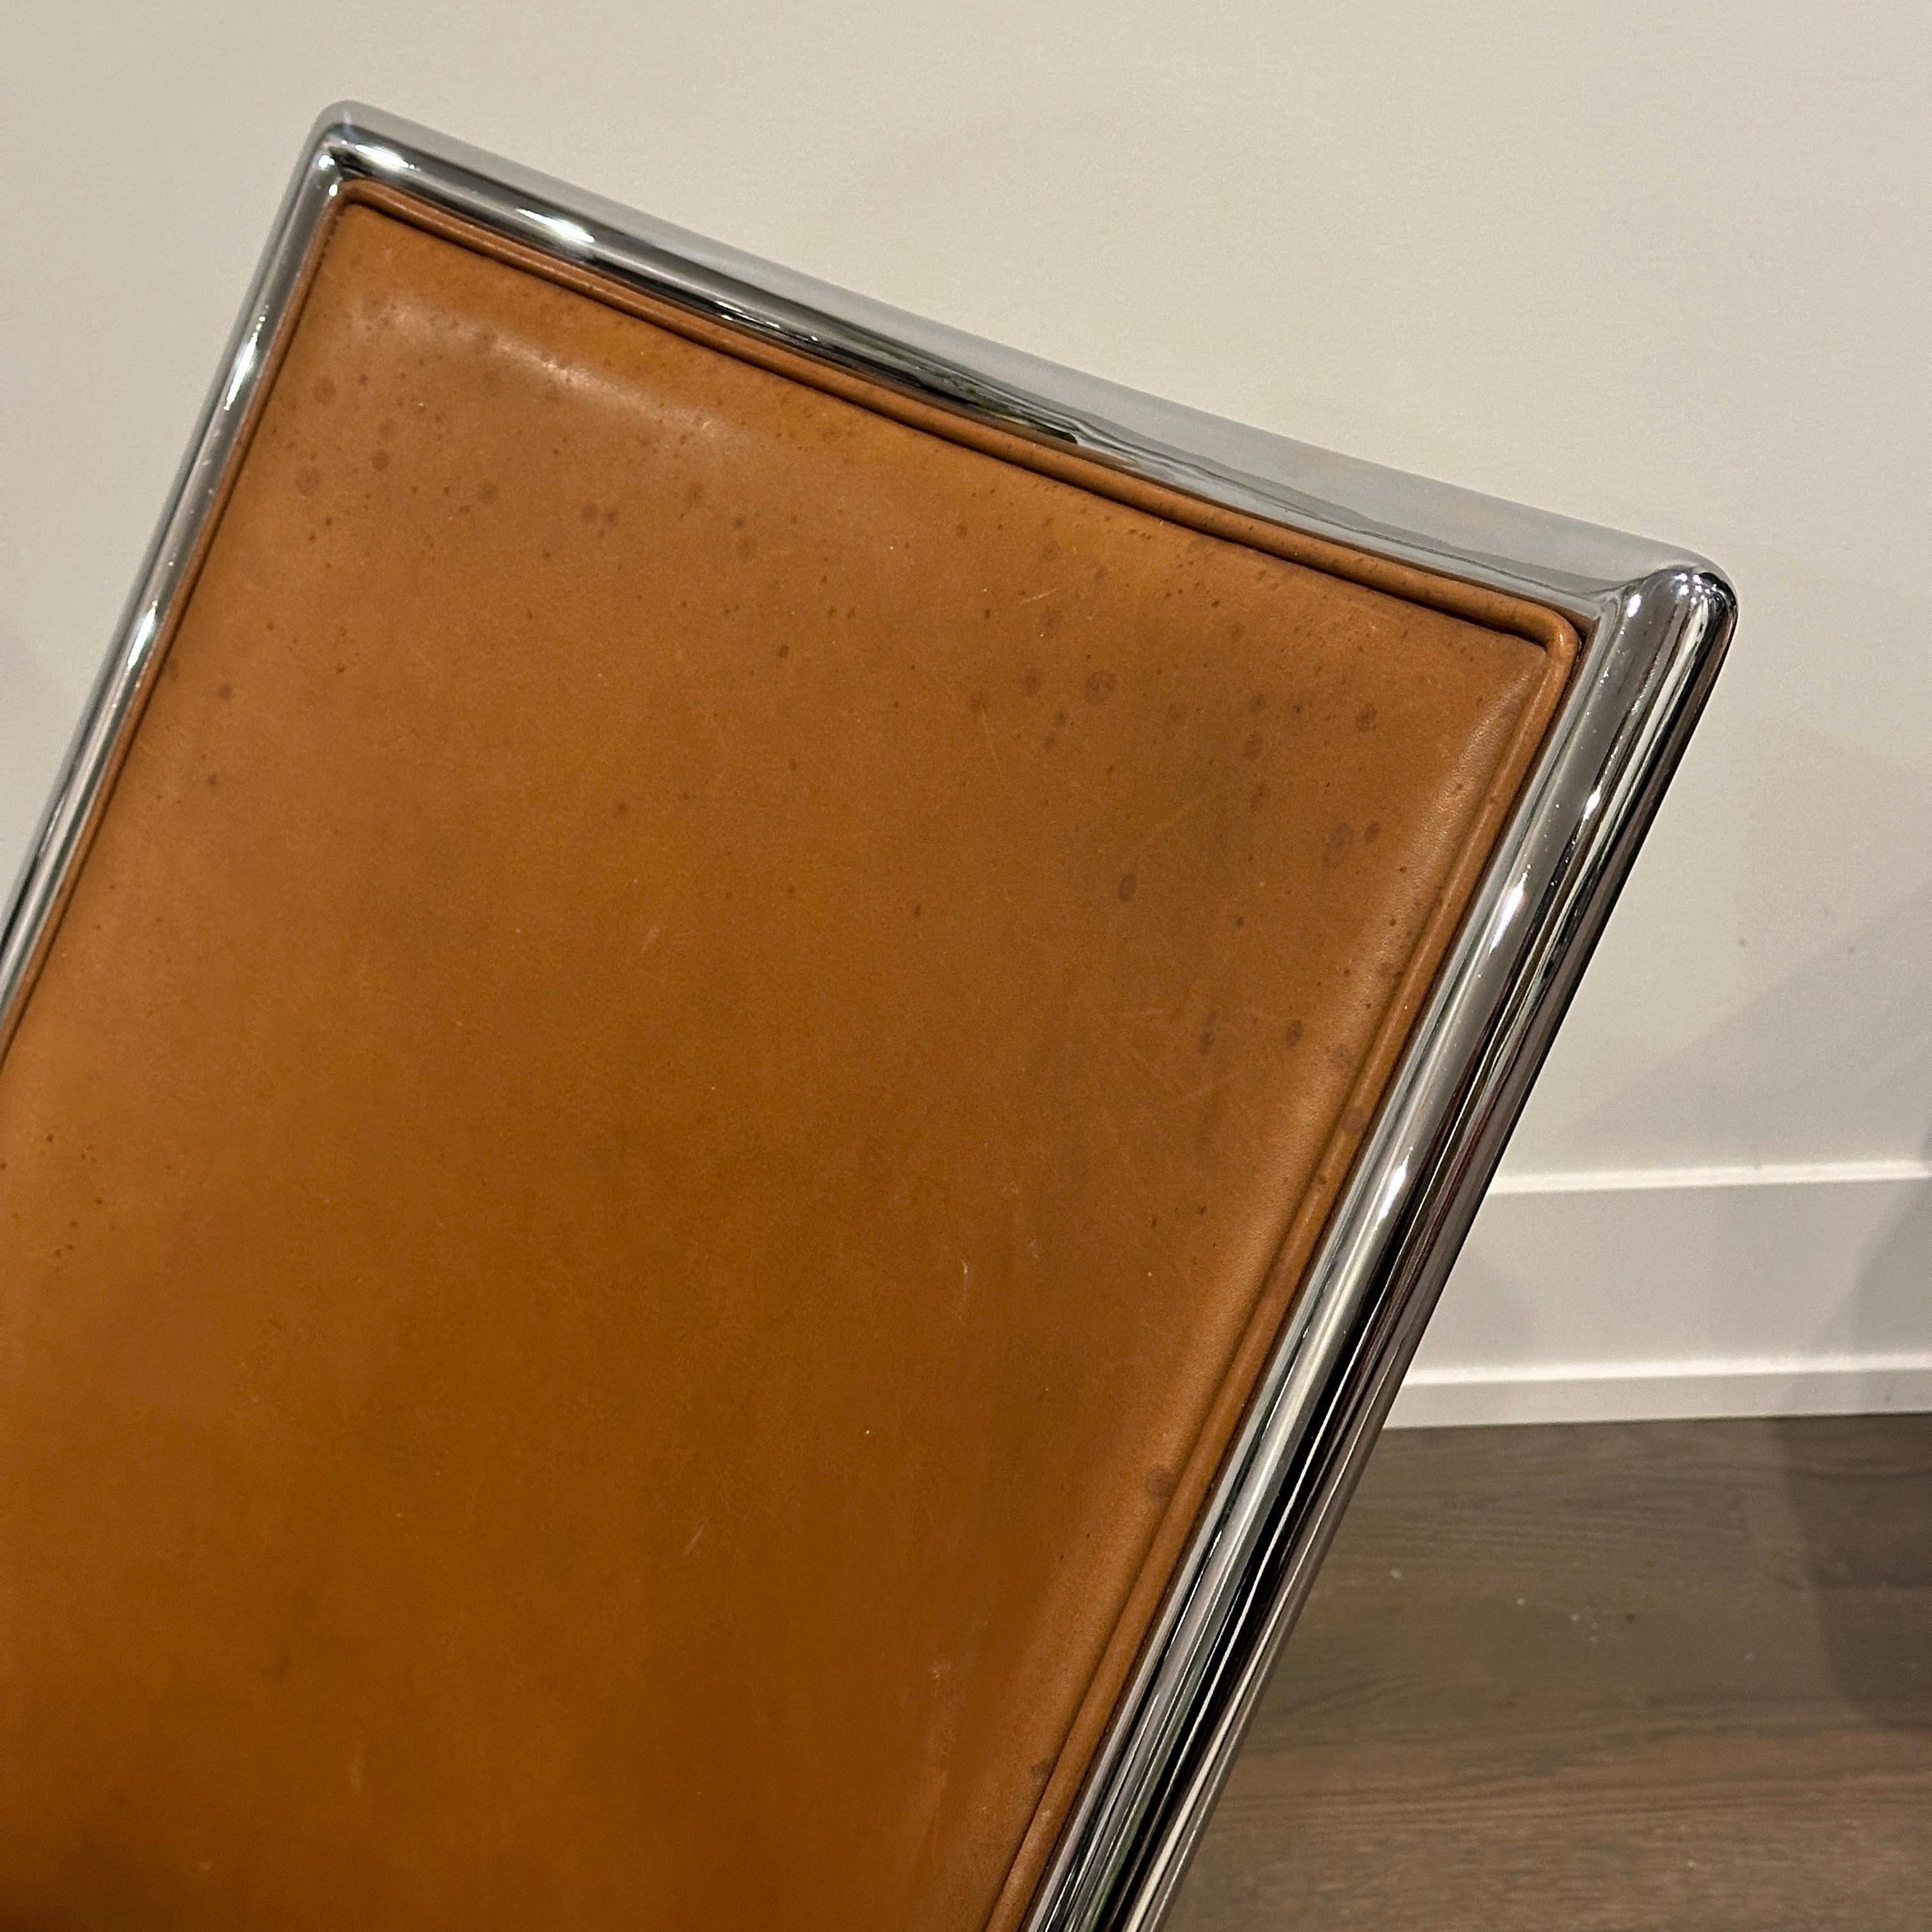 Chrome frame scissor chair by designer Ward Bennett, in brown leather, piece is marked.

